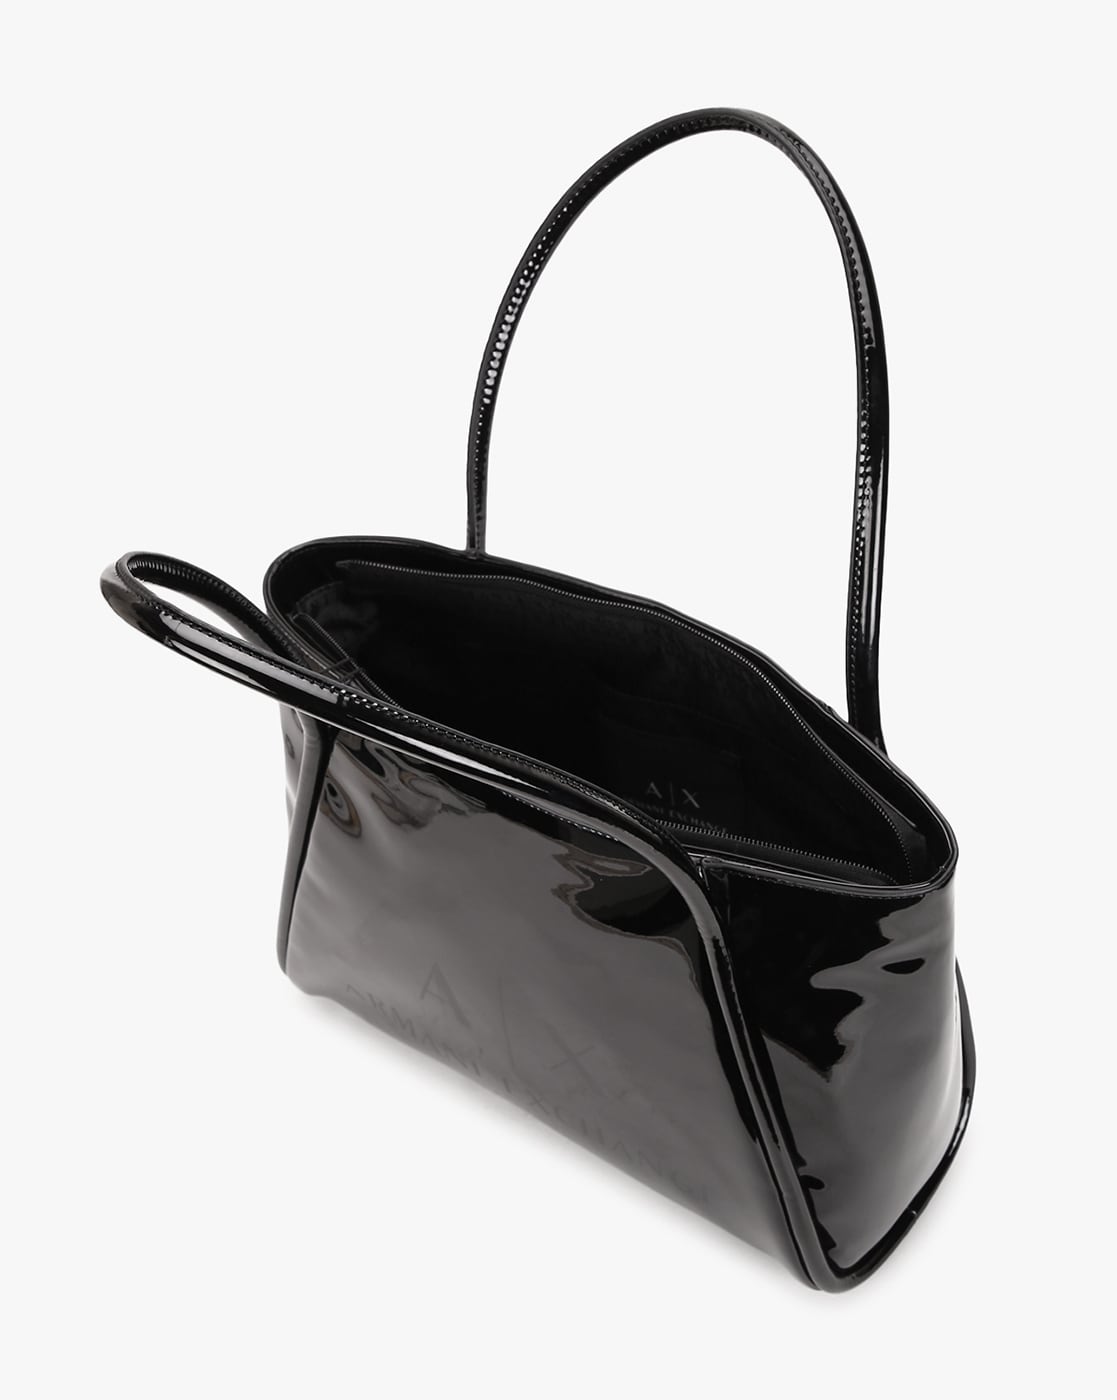 LJOSEIND Shiny Patent Leather Handbags Shoulder Bags Fashion Satchel Purses  Top Handle Bags for Women : Clothing, Shoes & Jewelry - Amazon.com